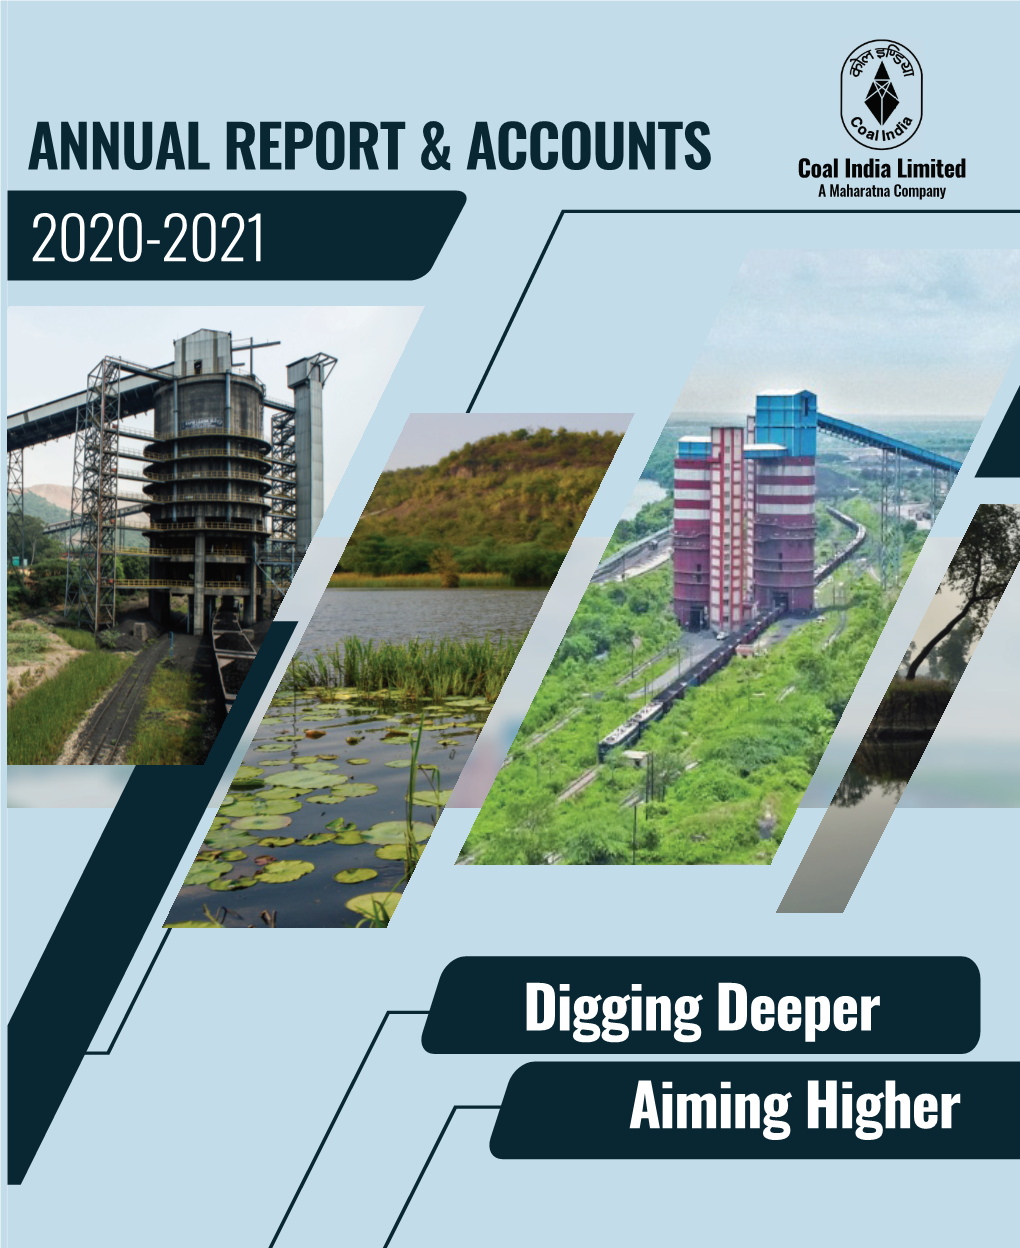 Annual Report & Accounts 2020